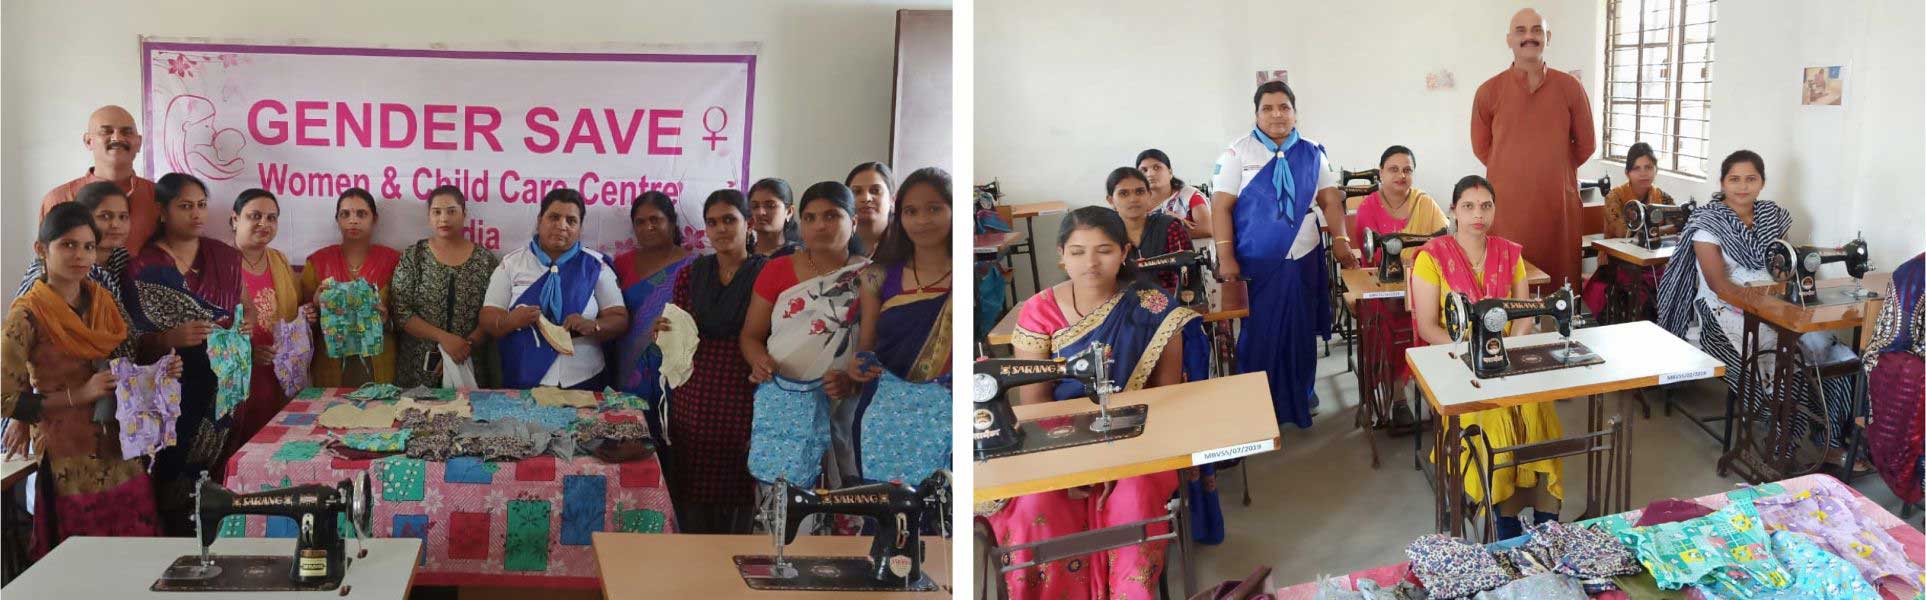 International Women's Day Celebration, "Project Save Gender" Held in Nagpur